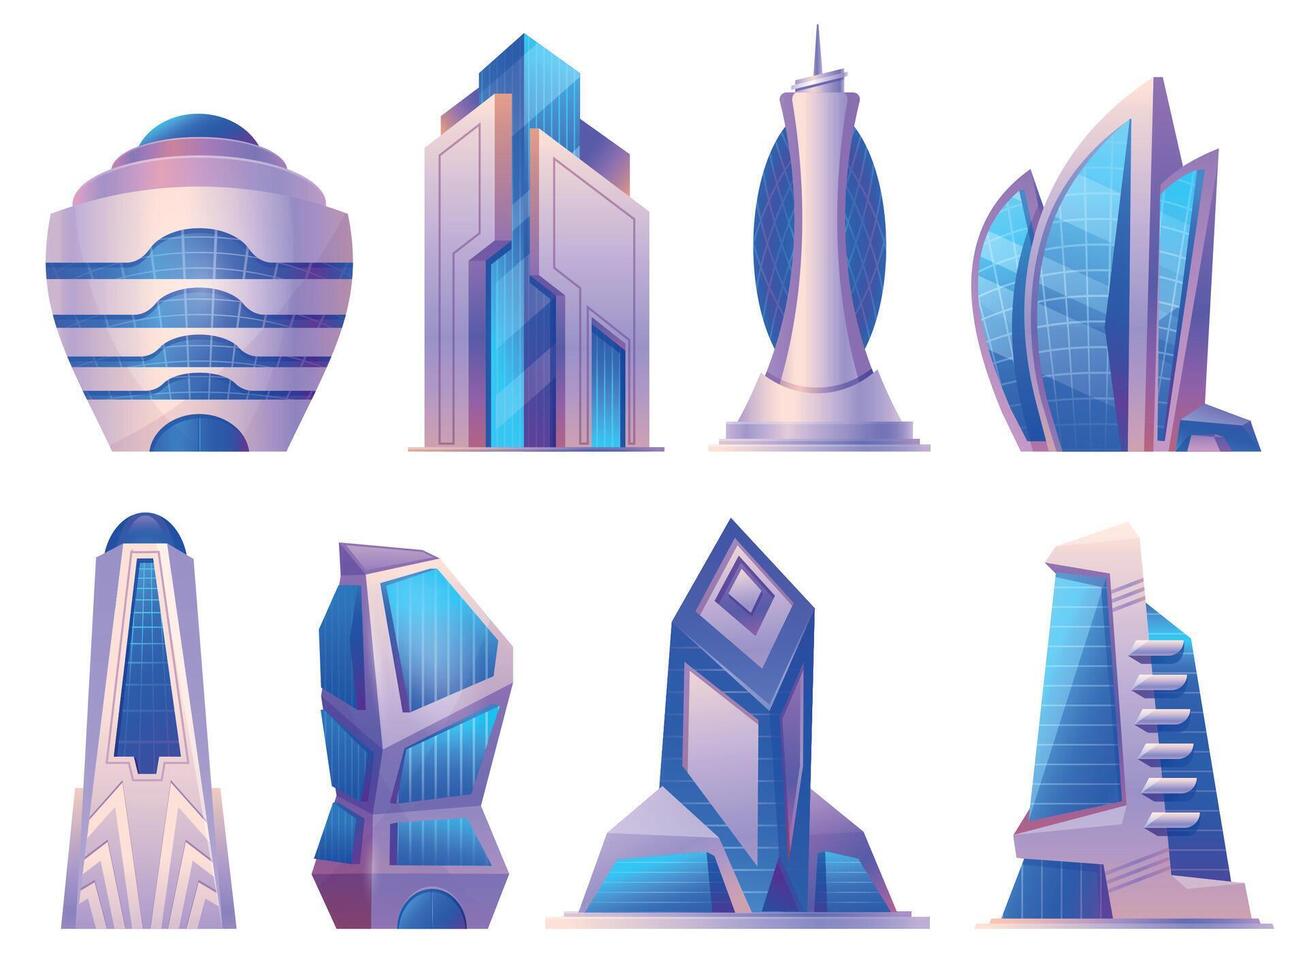 Future urban and alien city buildings, skyscrapers and office towers. Futuristic cyberpunk architecture, megalopolis skyscraper vector set